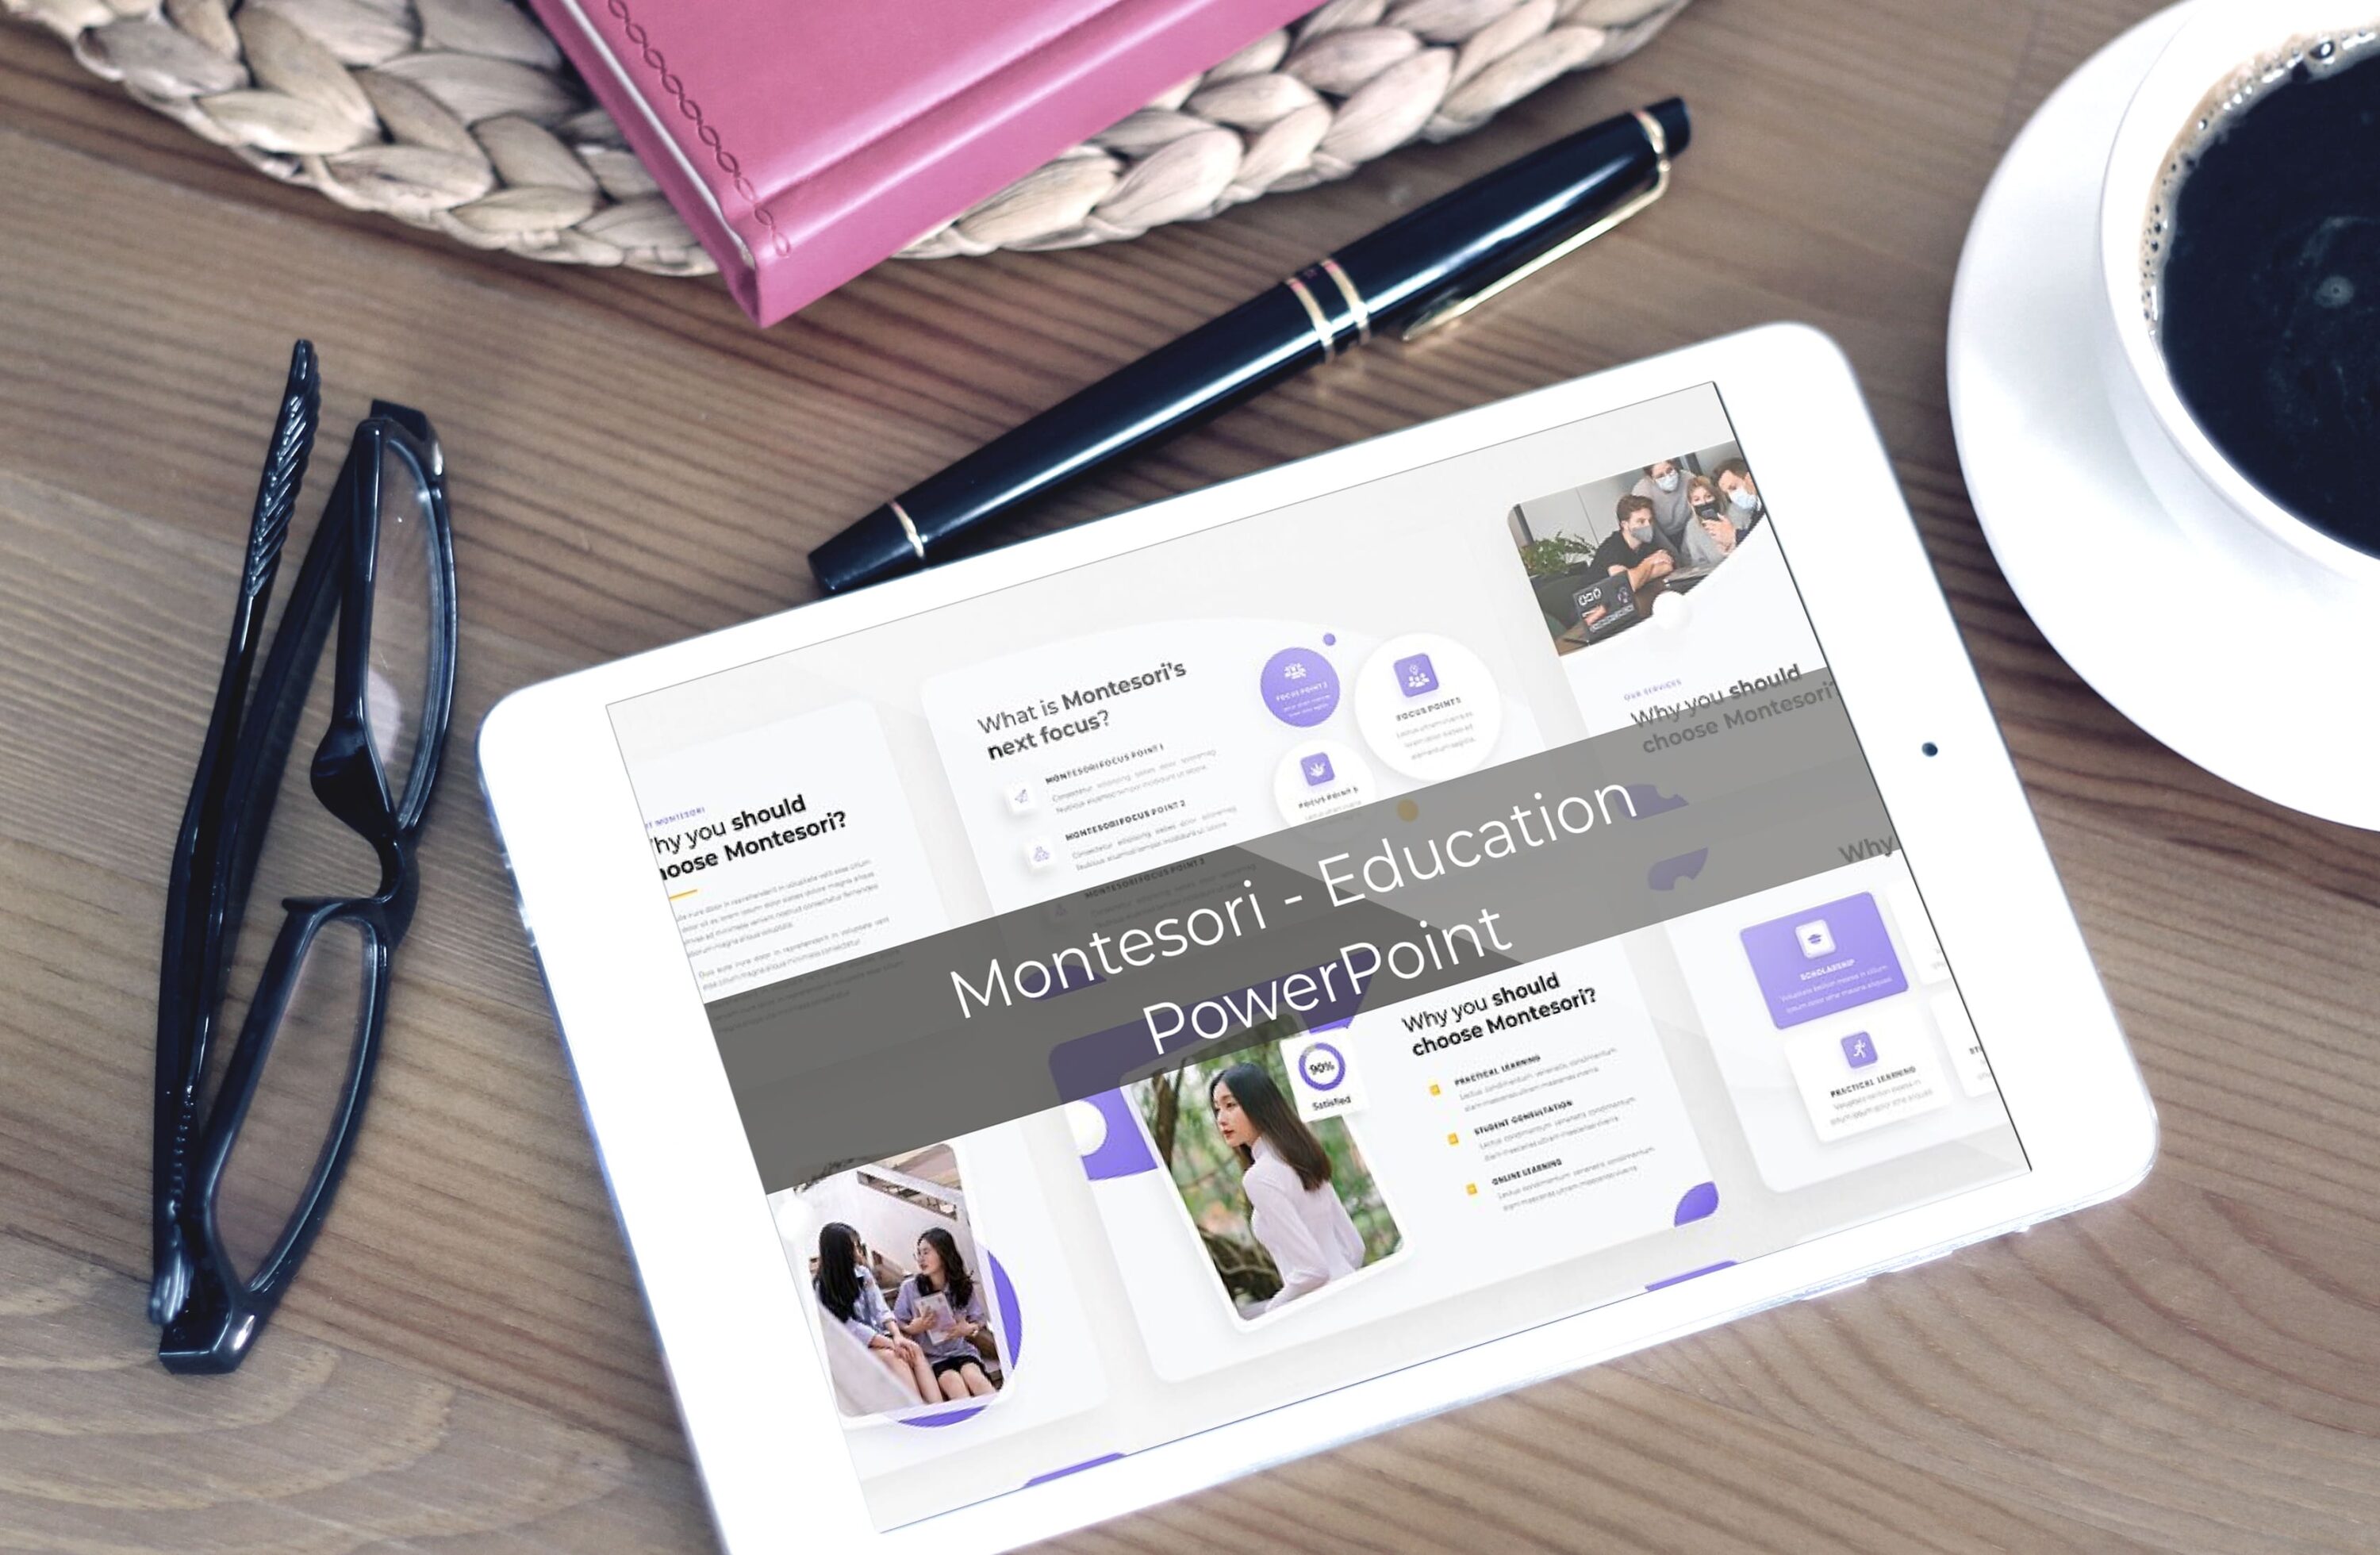 Montesori - Education PowerPoint - tablet.